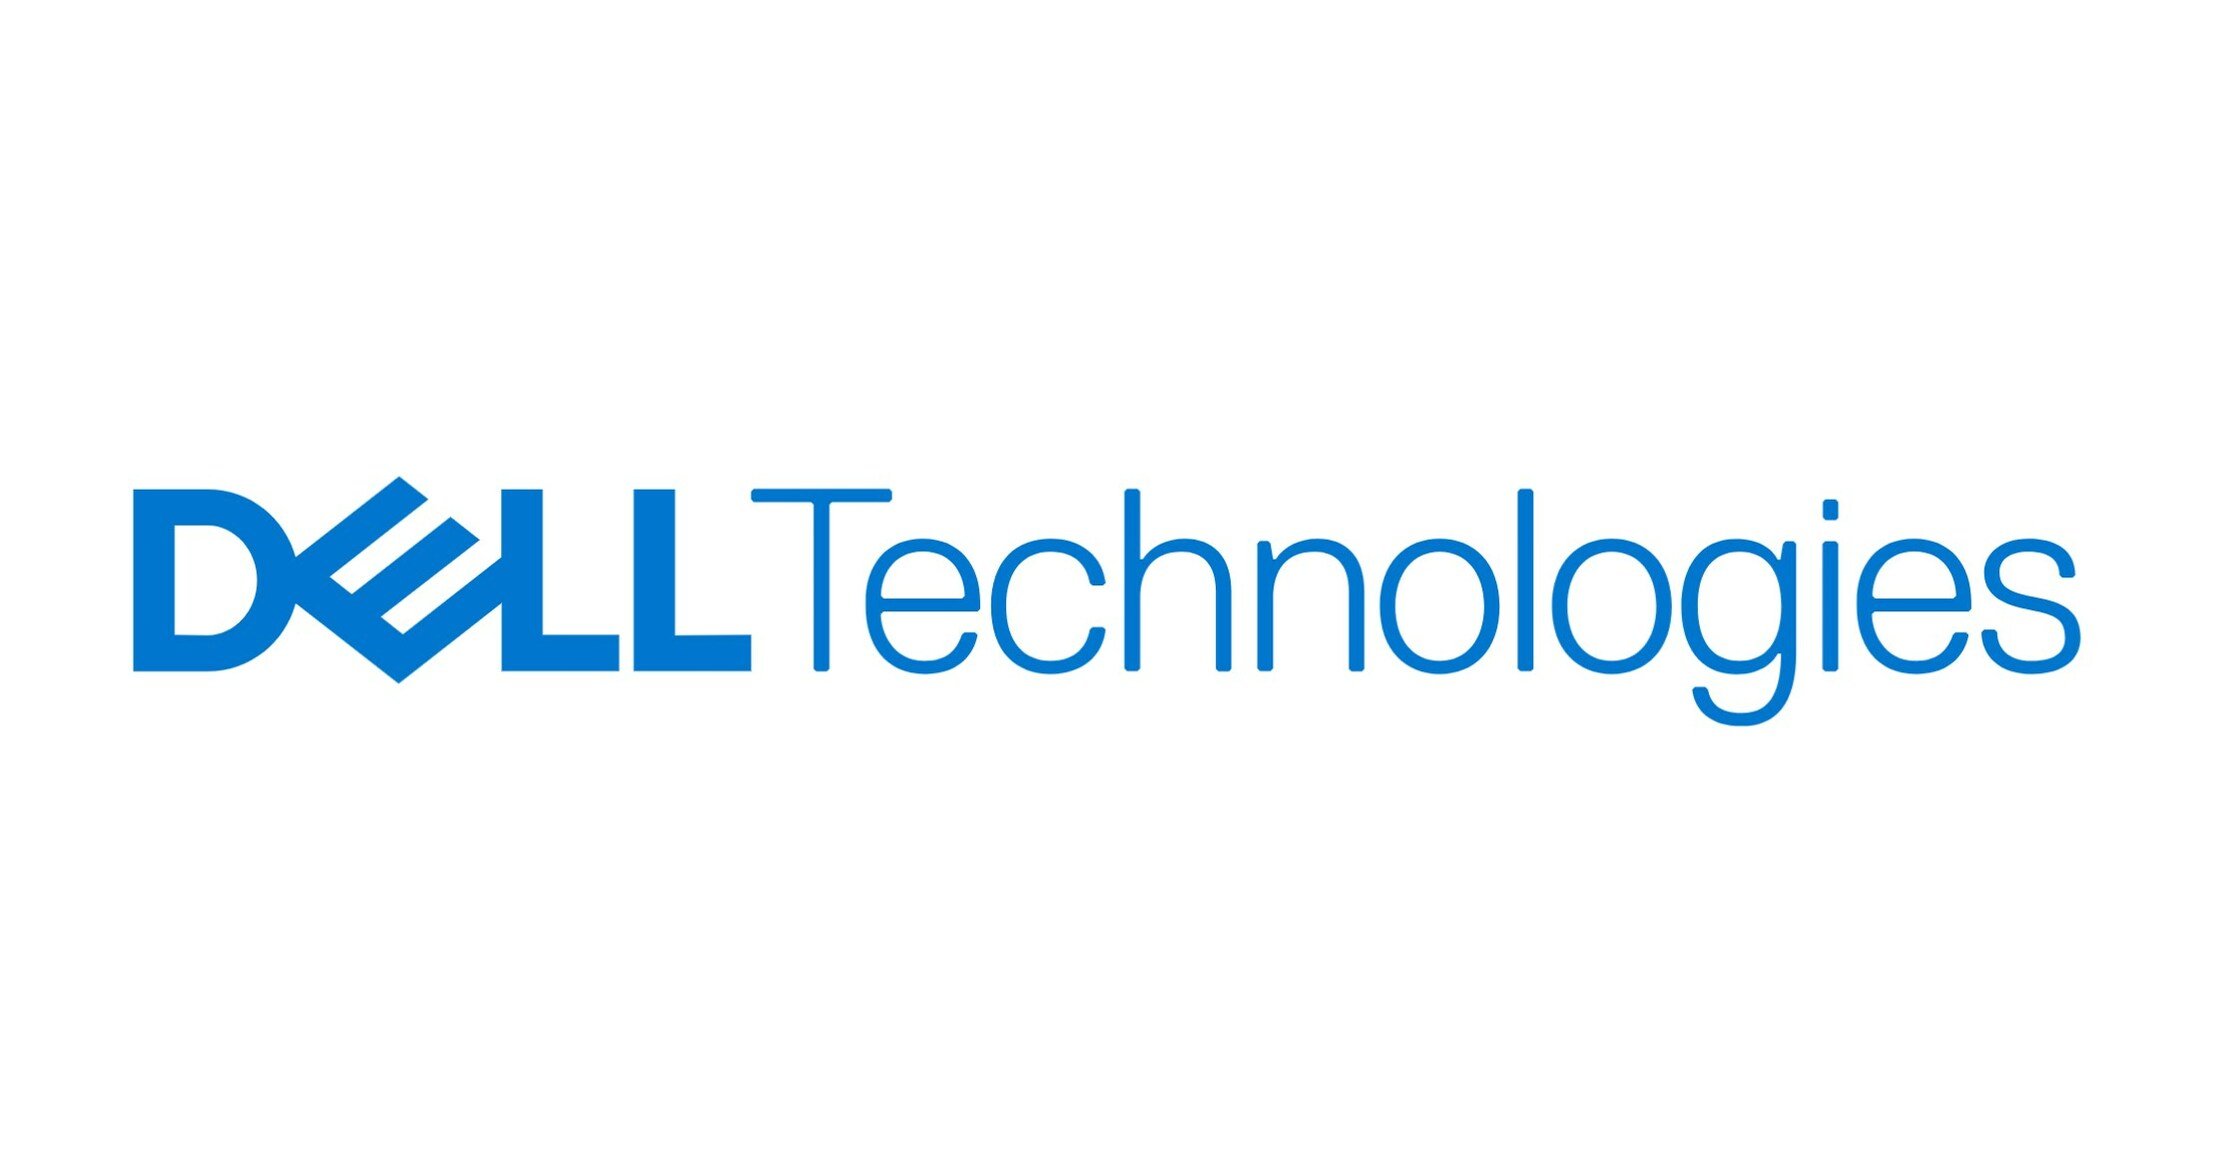 Top Digital Transformation Solutions Companies: Dell